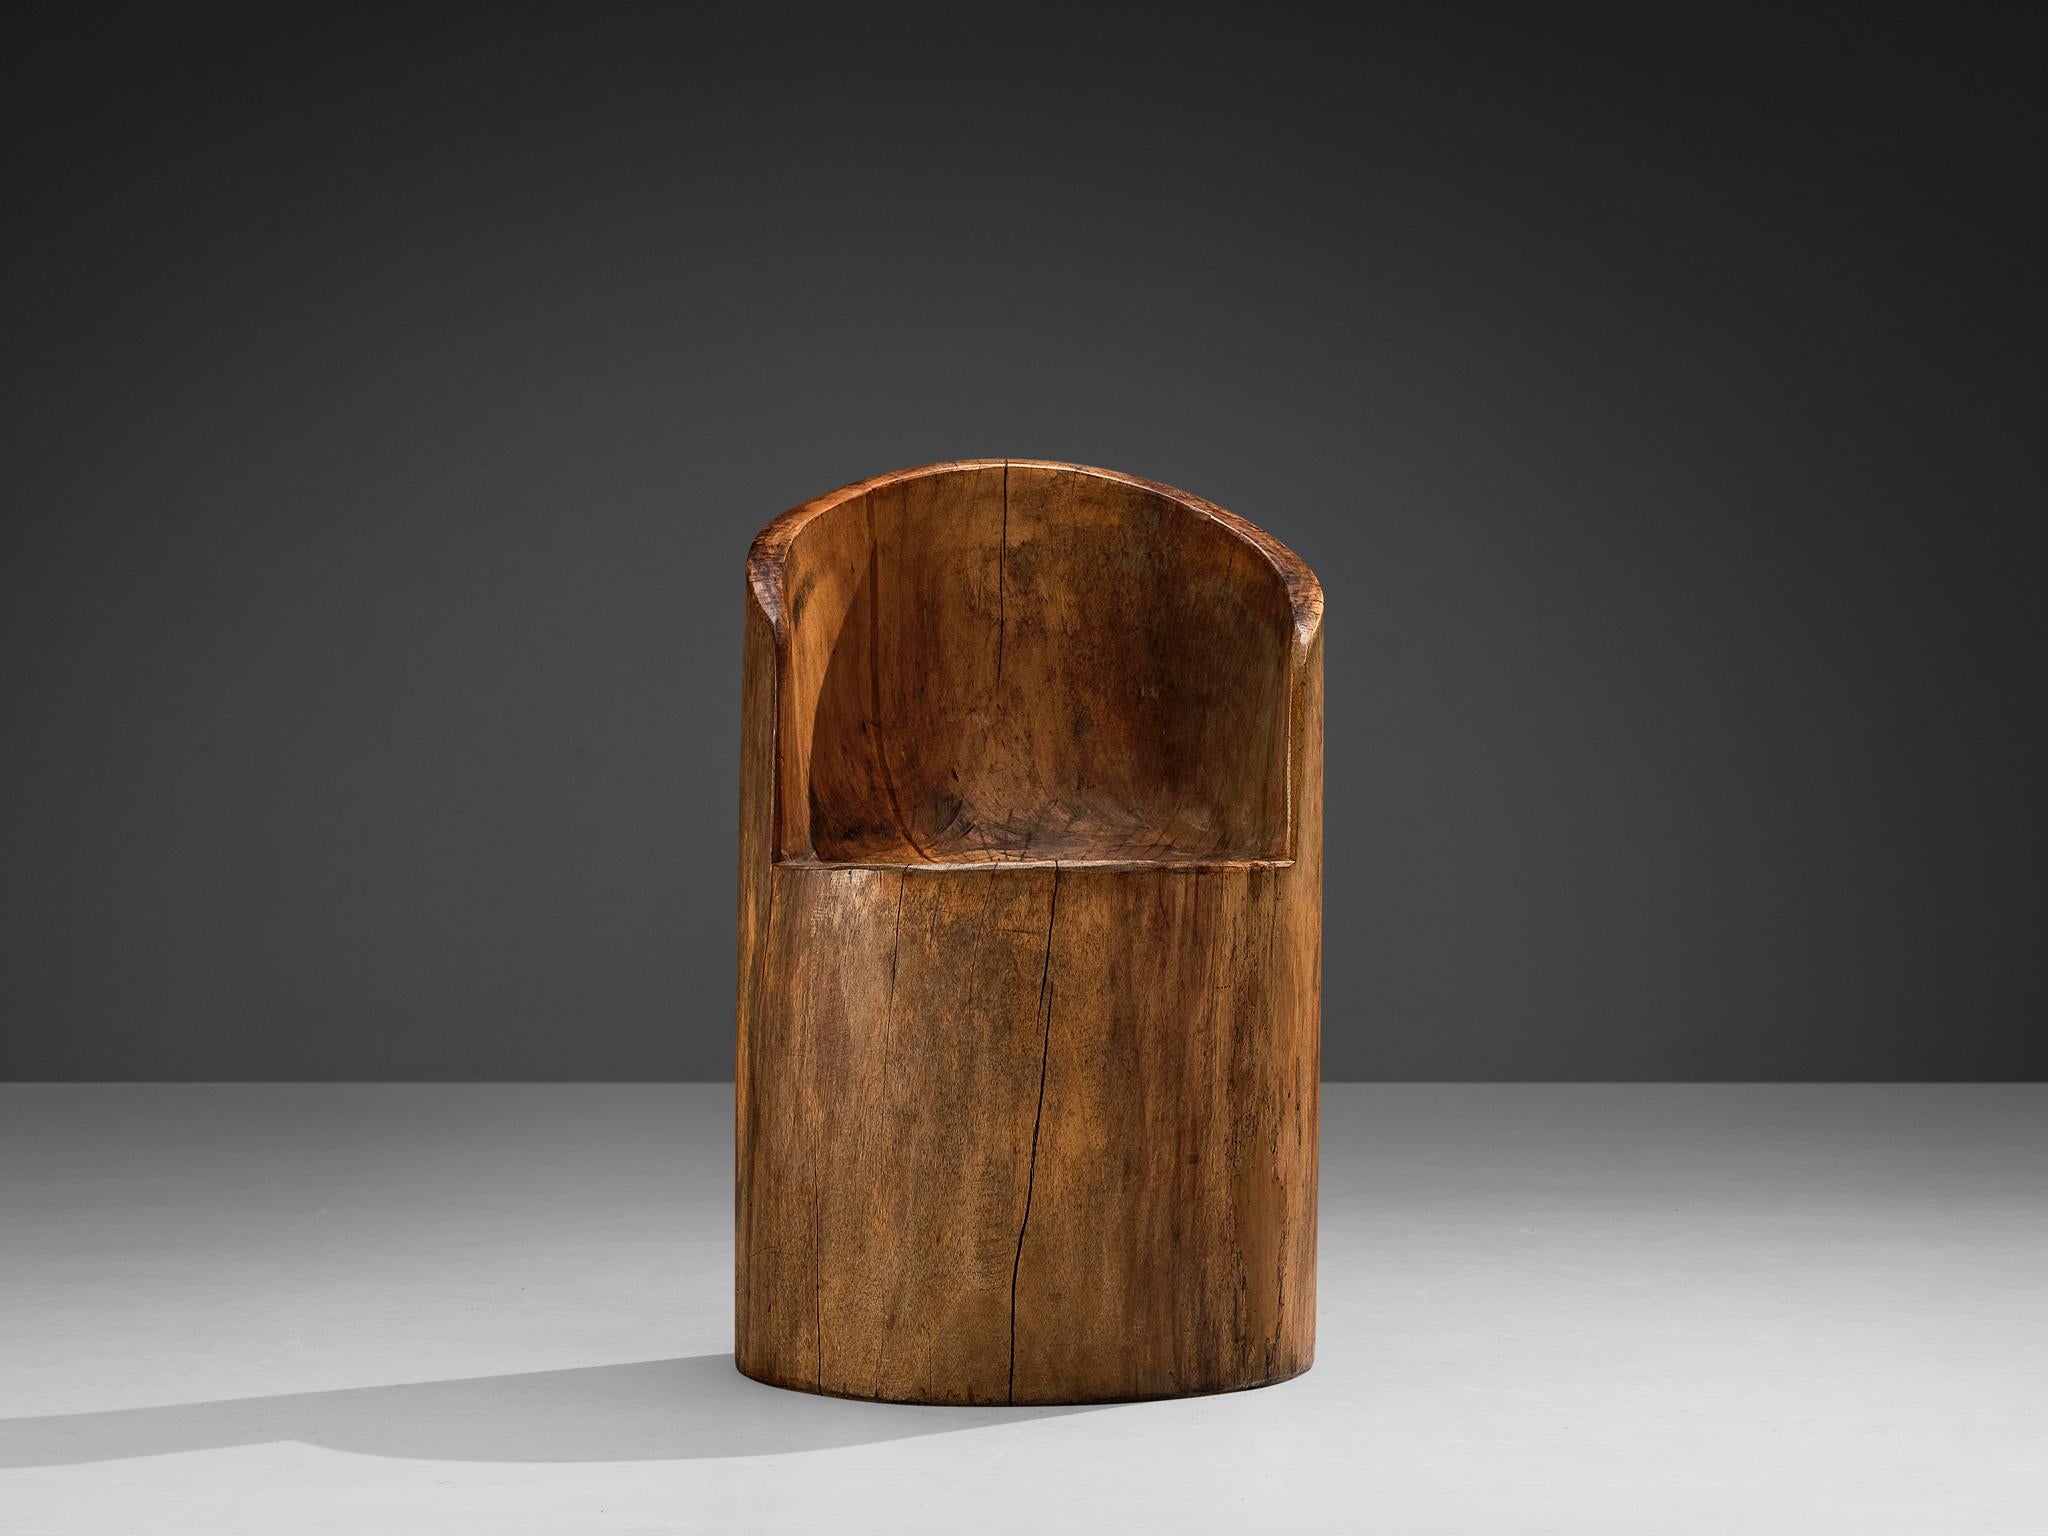 José Zanine Caldas Hand-Sculpted Chair in Brazilian Hardwood  For Sale 2